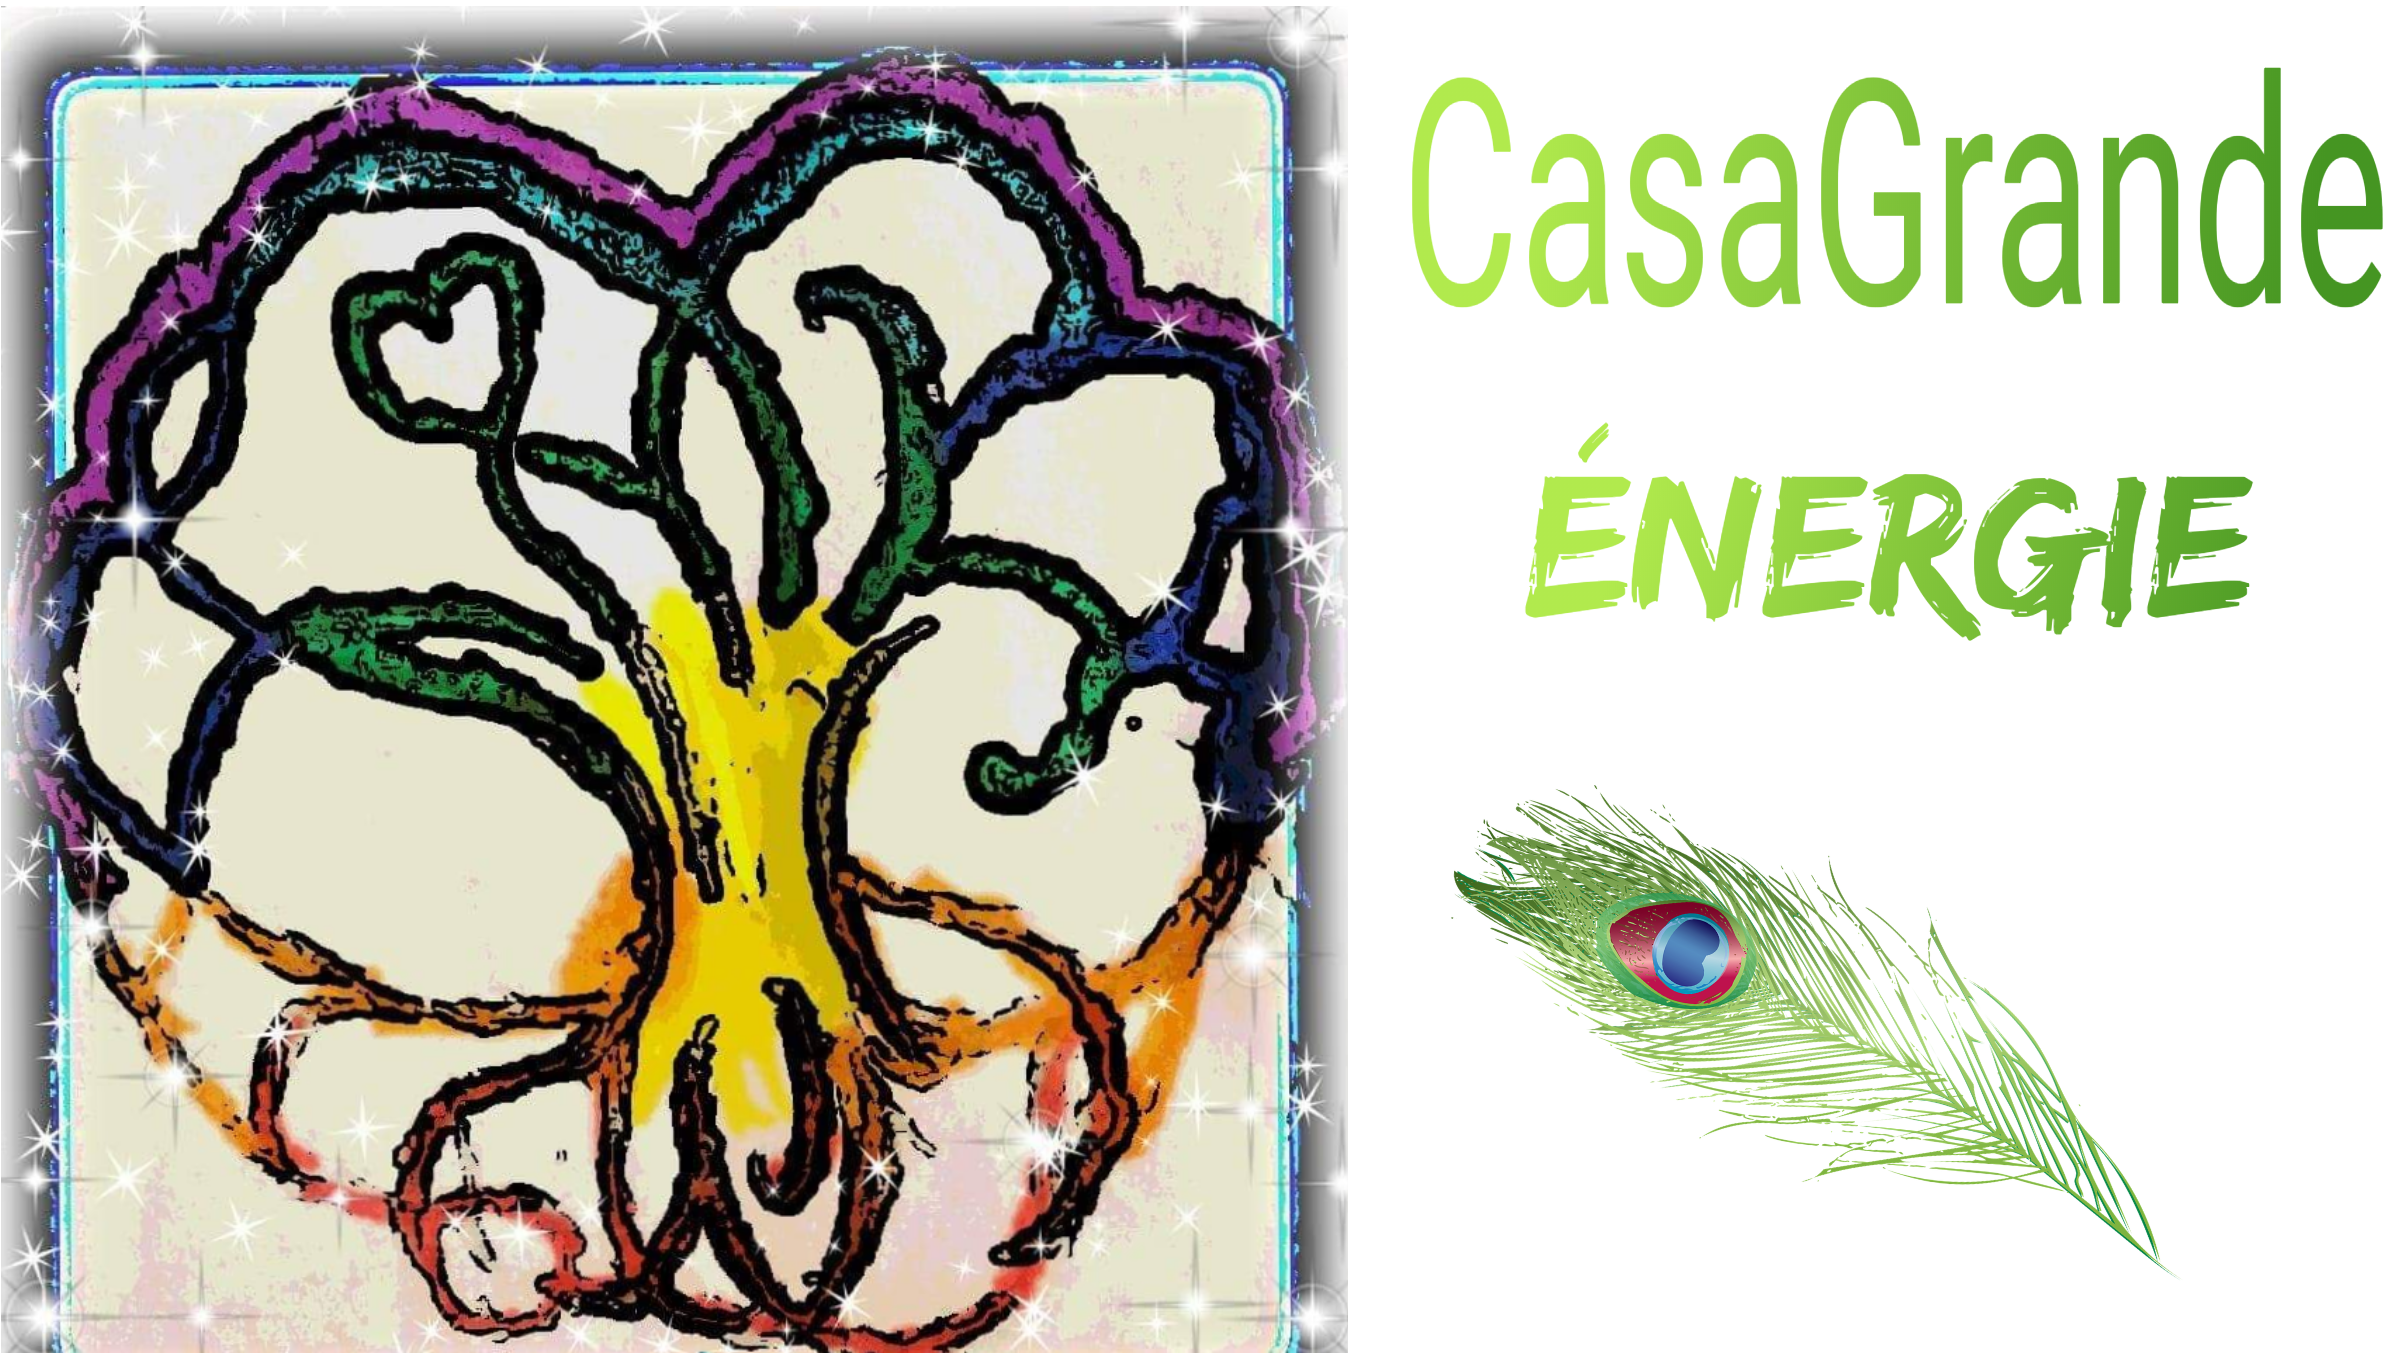 Casagrande Energie, boutique ésothérique  www.casagrande-energie.ch